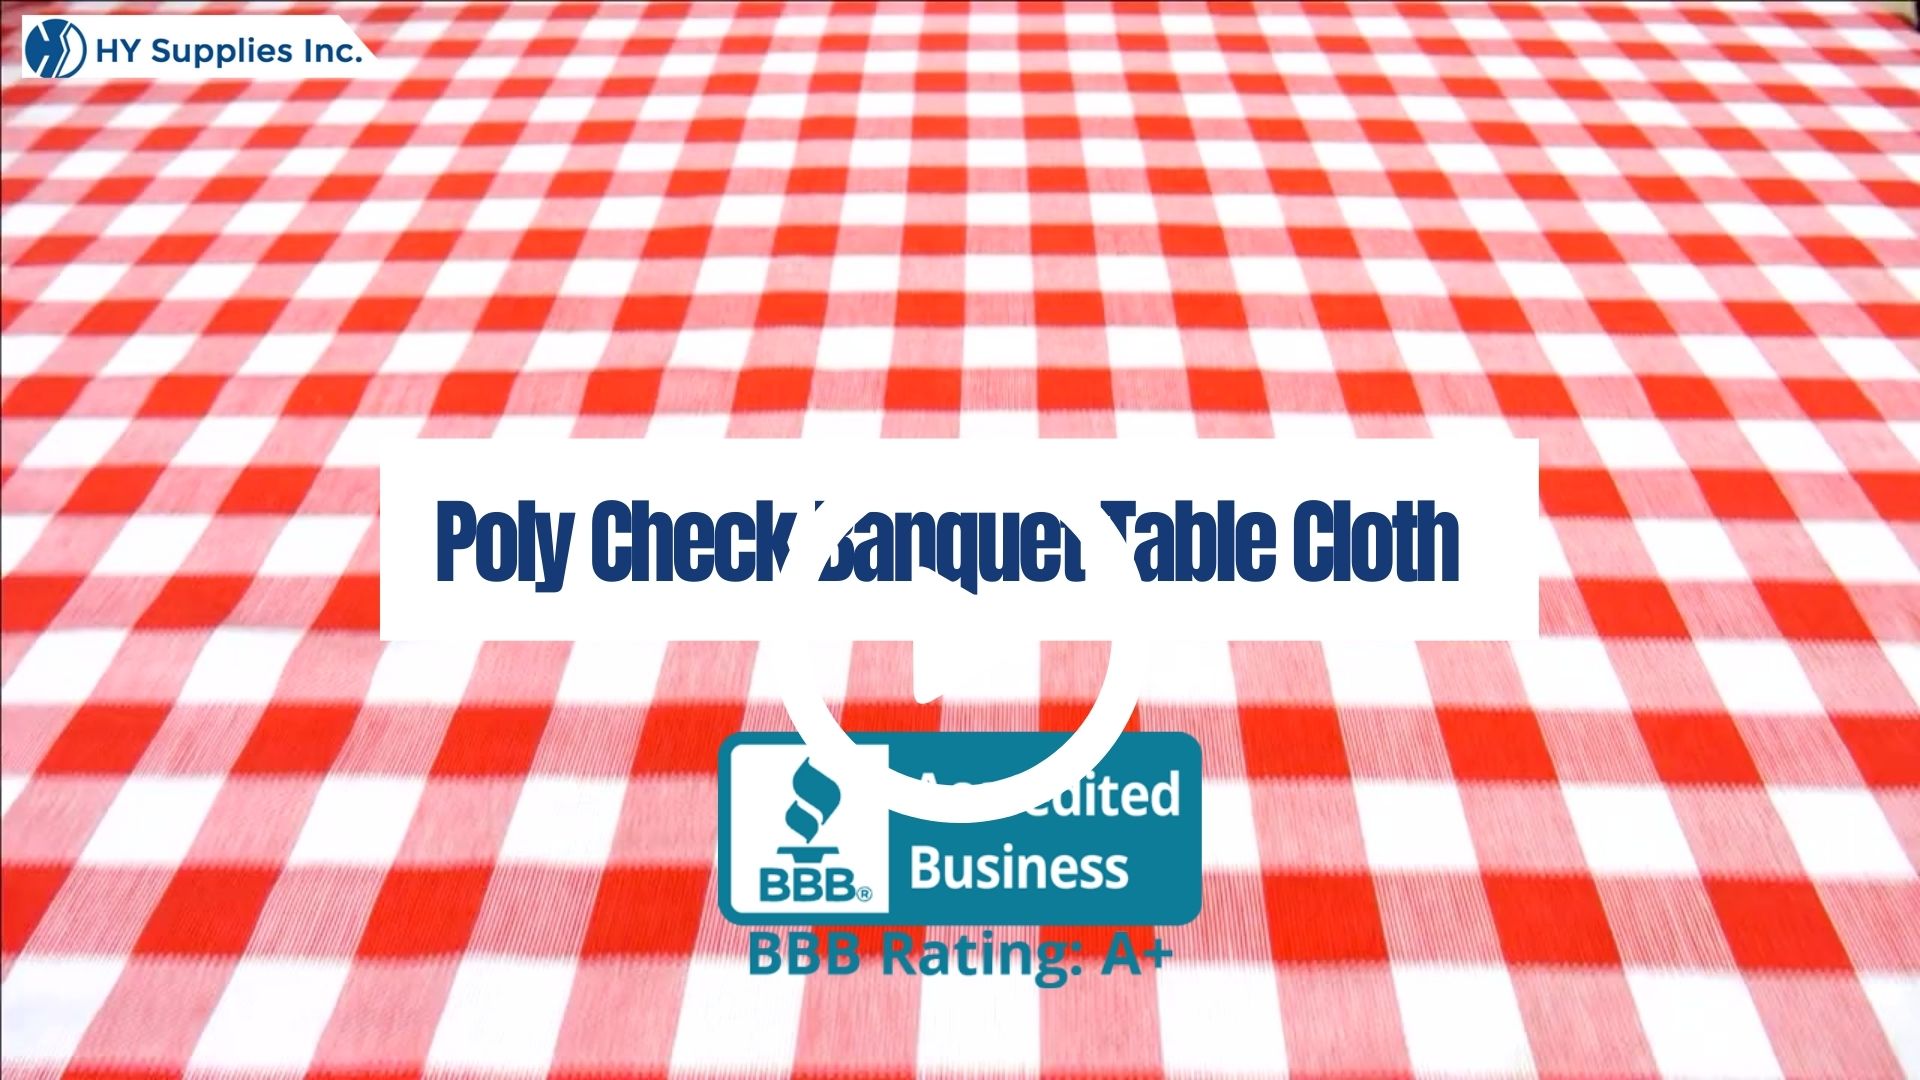 Poly Check Banquet Table Cloth 